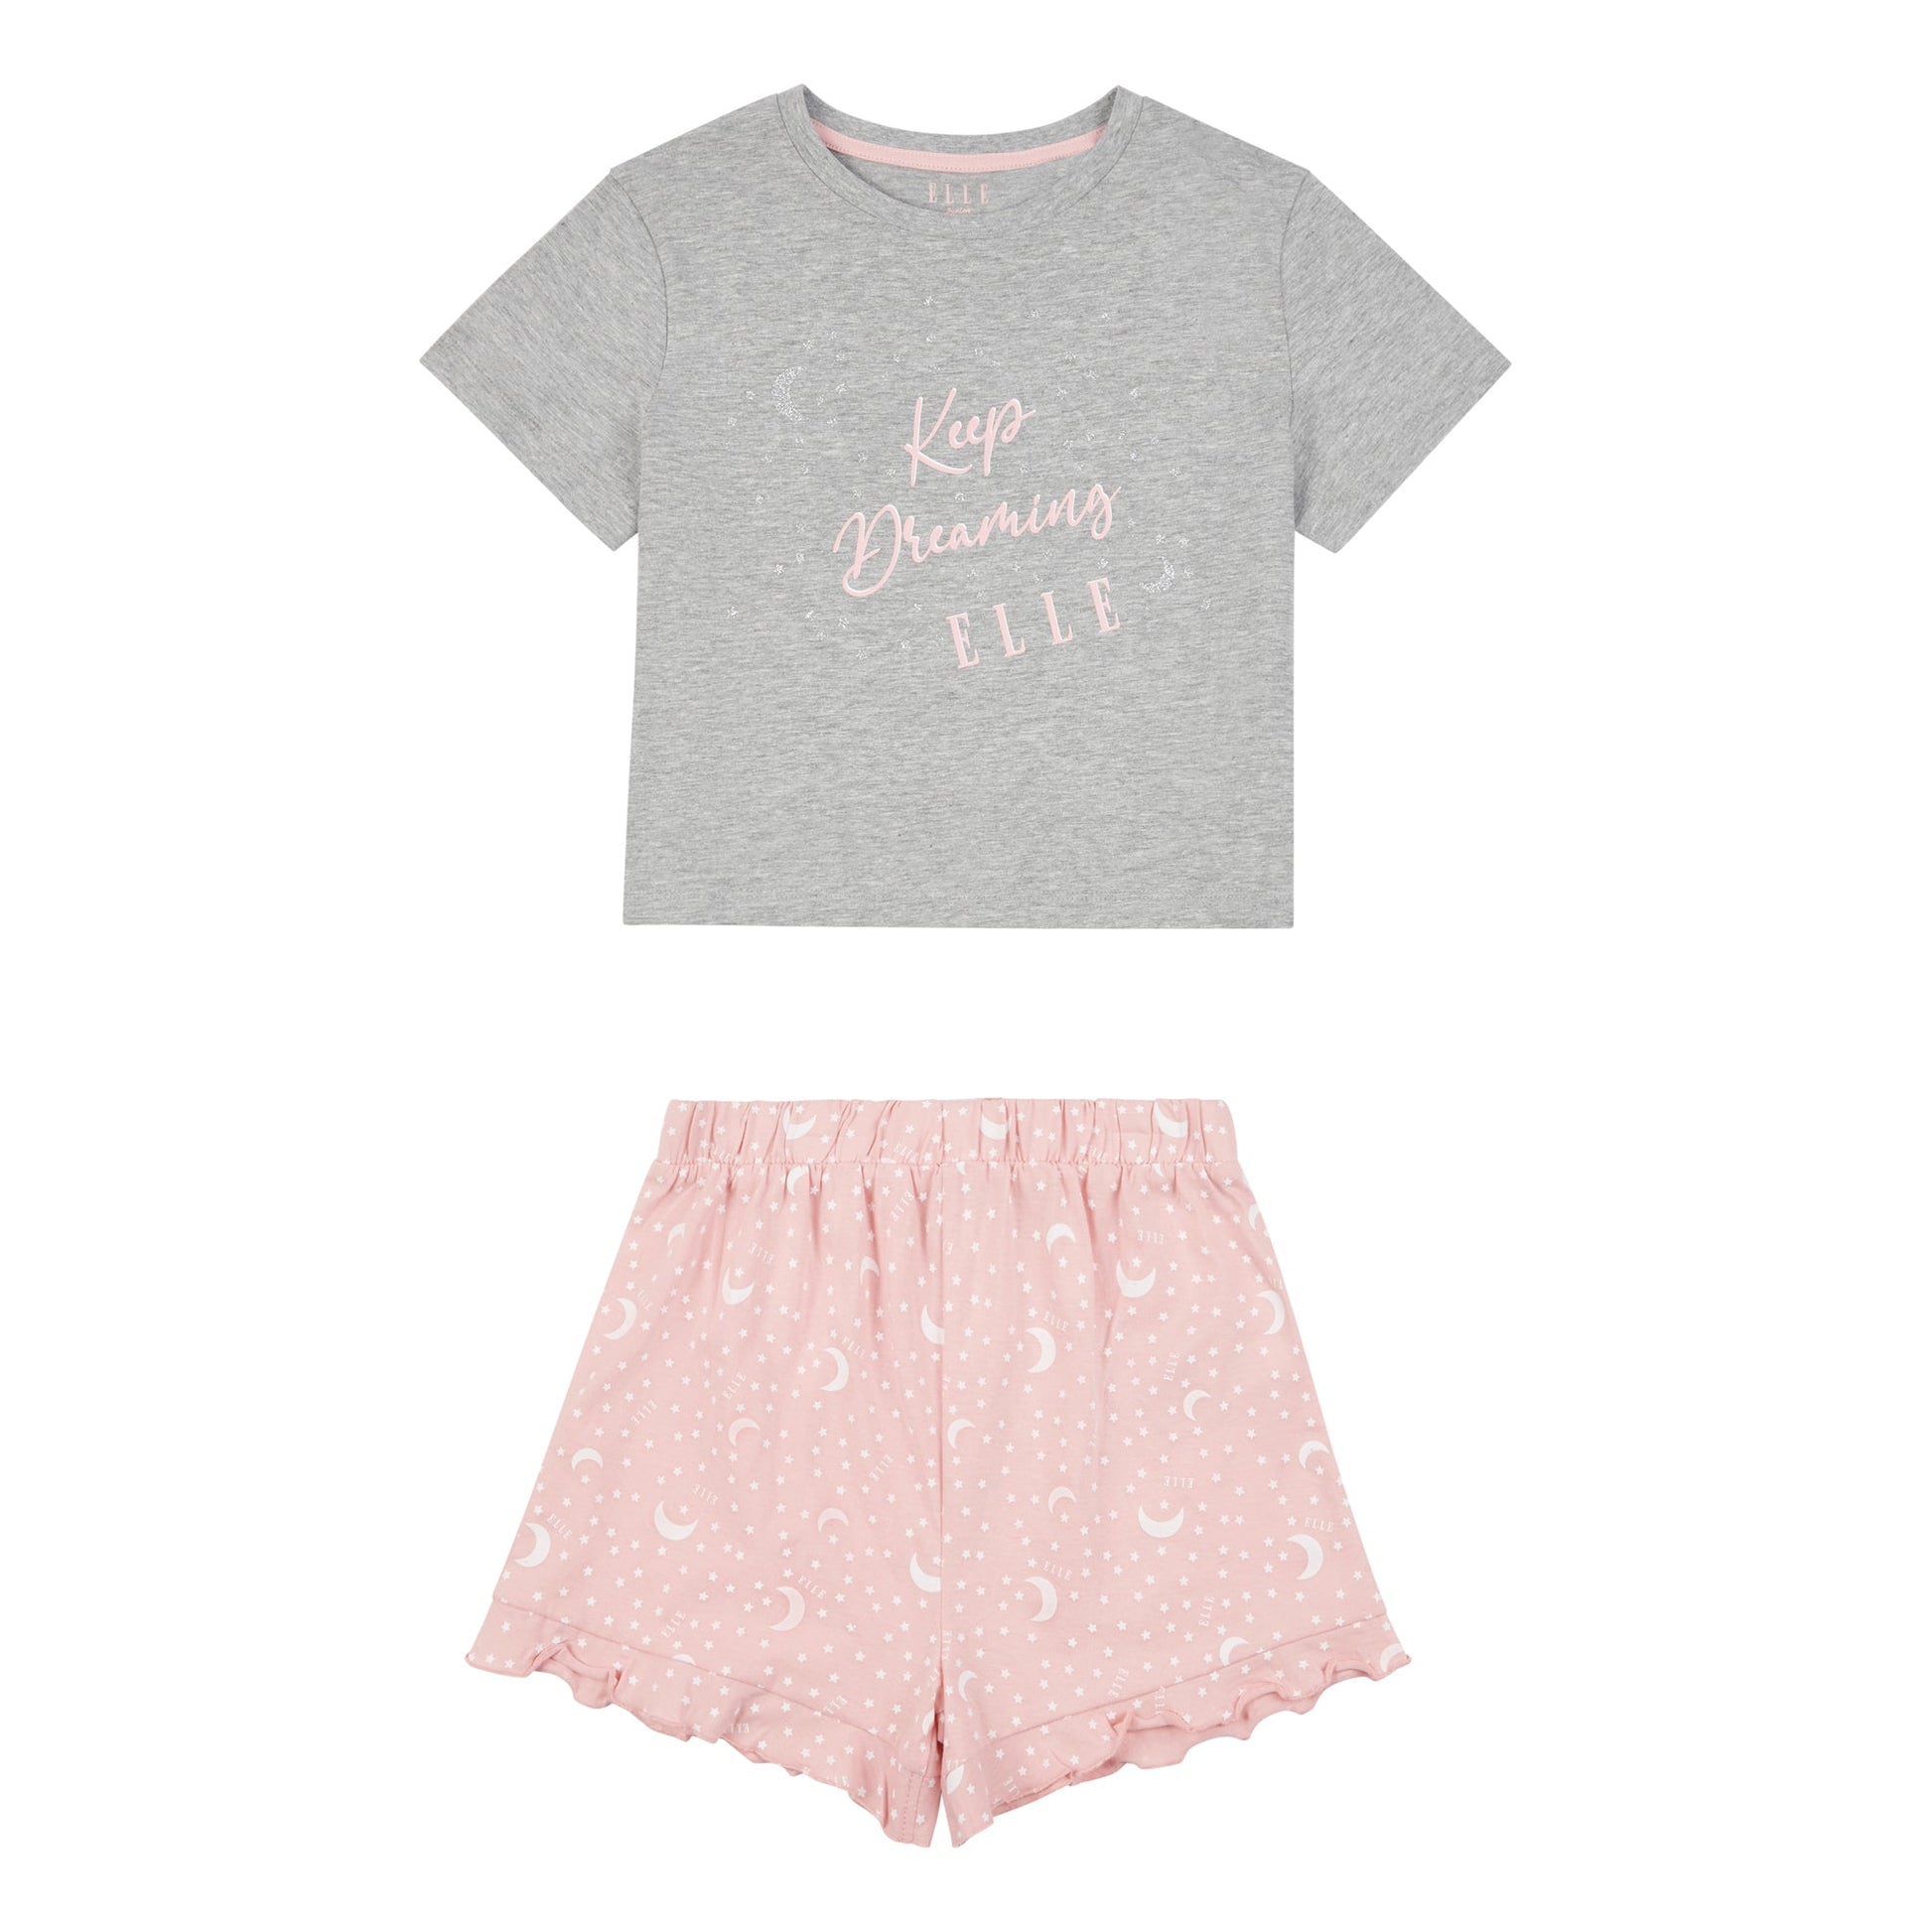 Elle Girls Graphic T-Shirt and Short Set